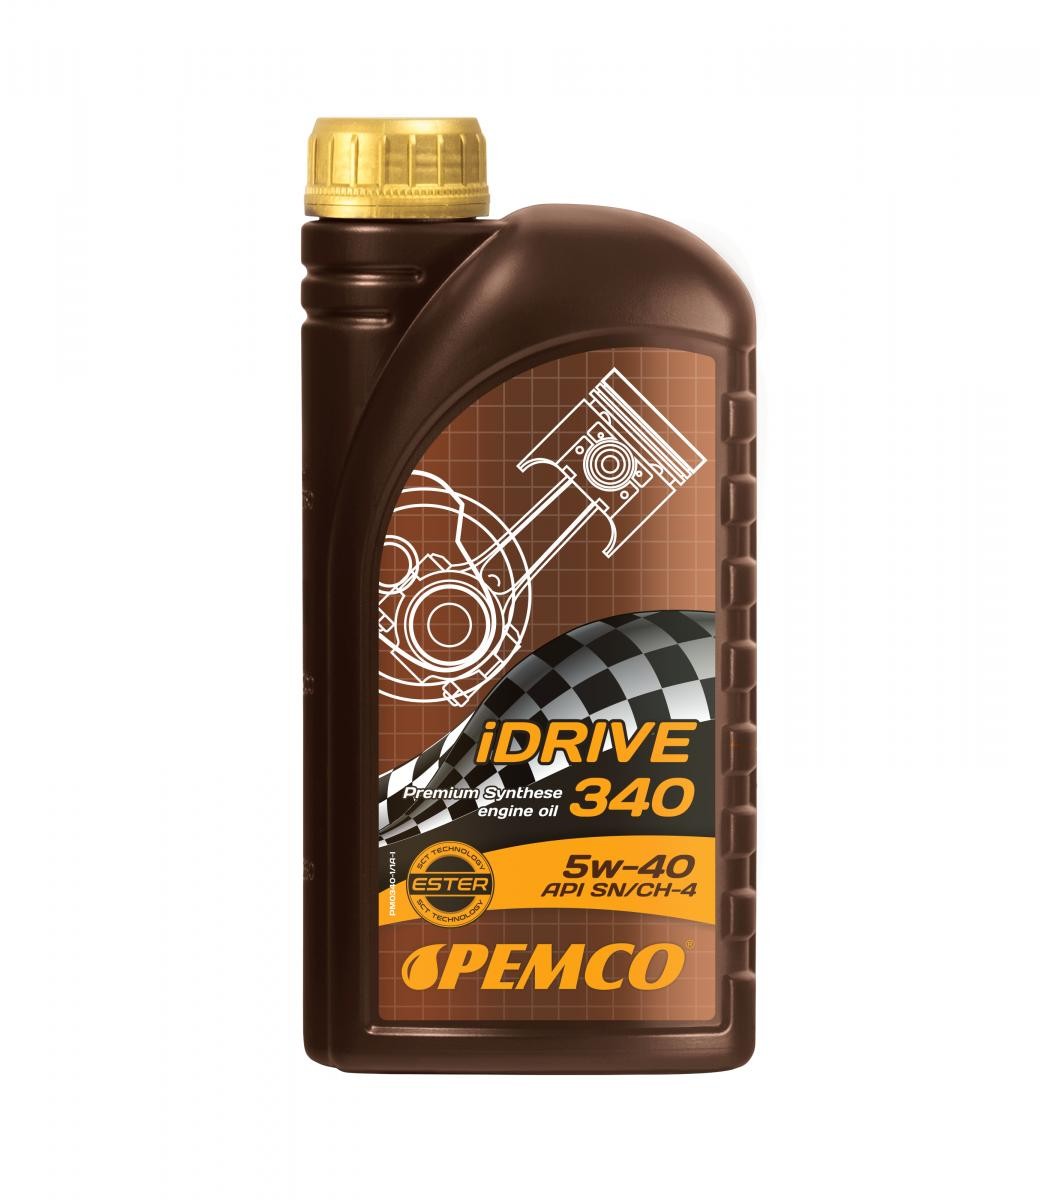 PEMCO iDRIVE 300, iDRIVE 340 PM0340-1 Engine oil 5W-40, 1l, Synthetic Oil